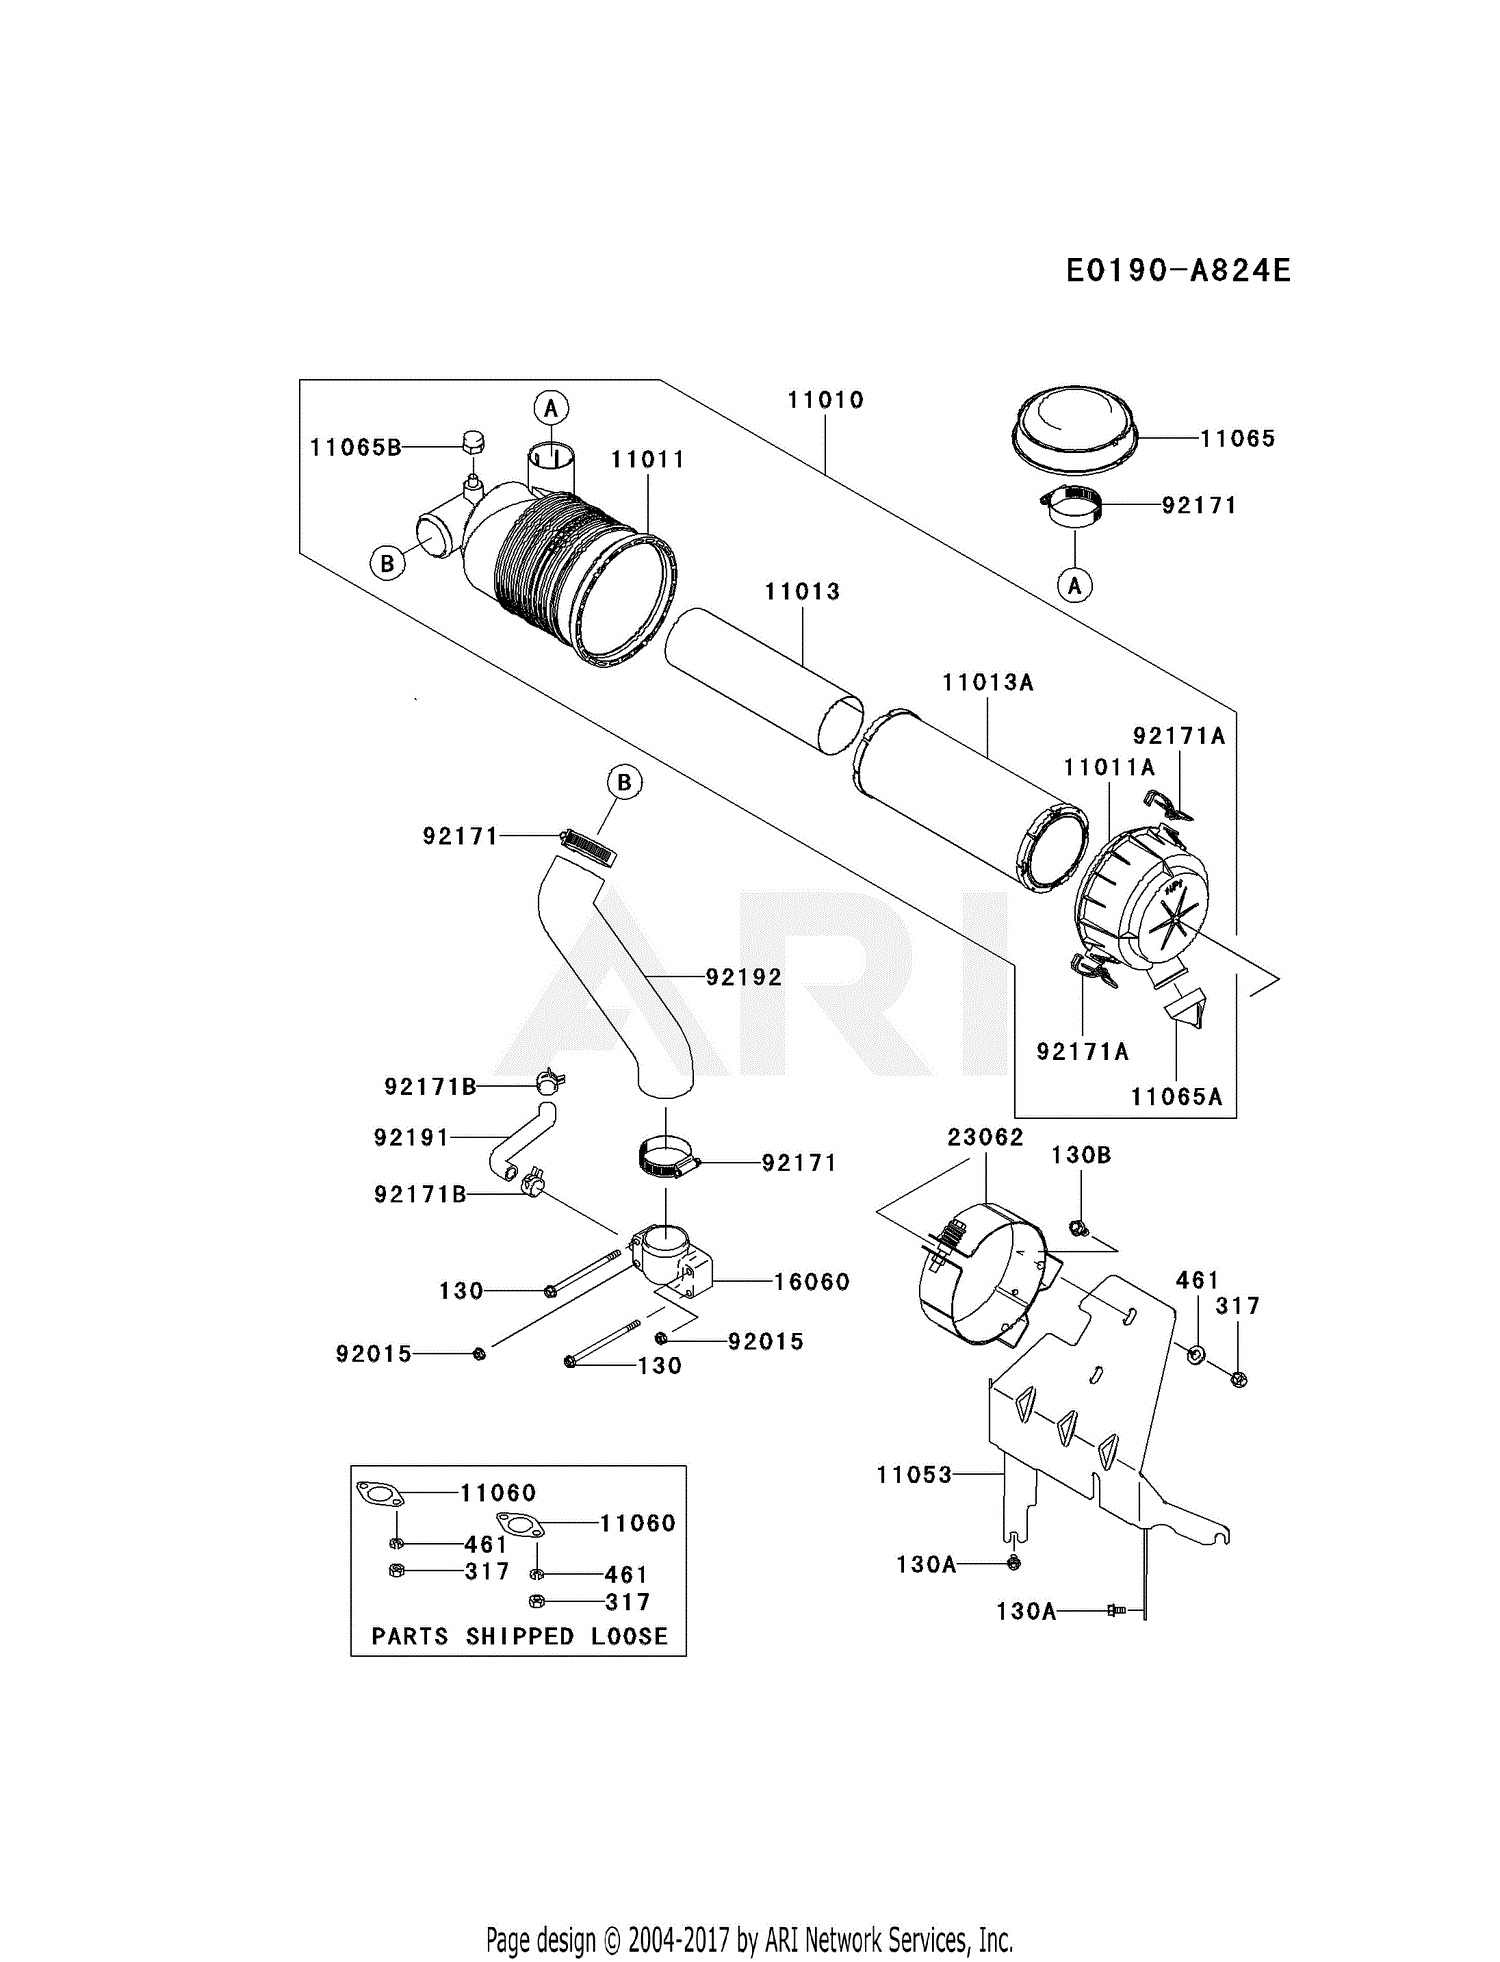 Hosing Gm 3400 Engine Diagram - Wiring Diagrams